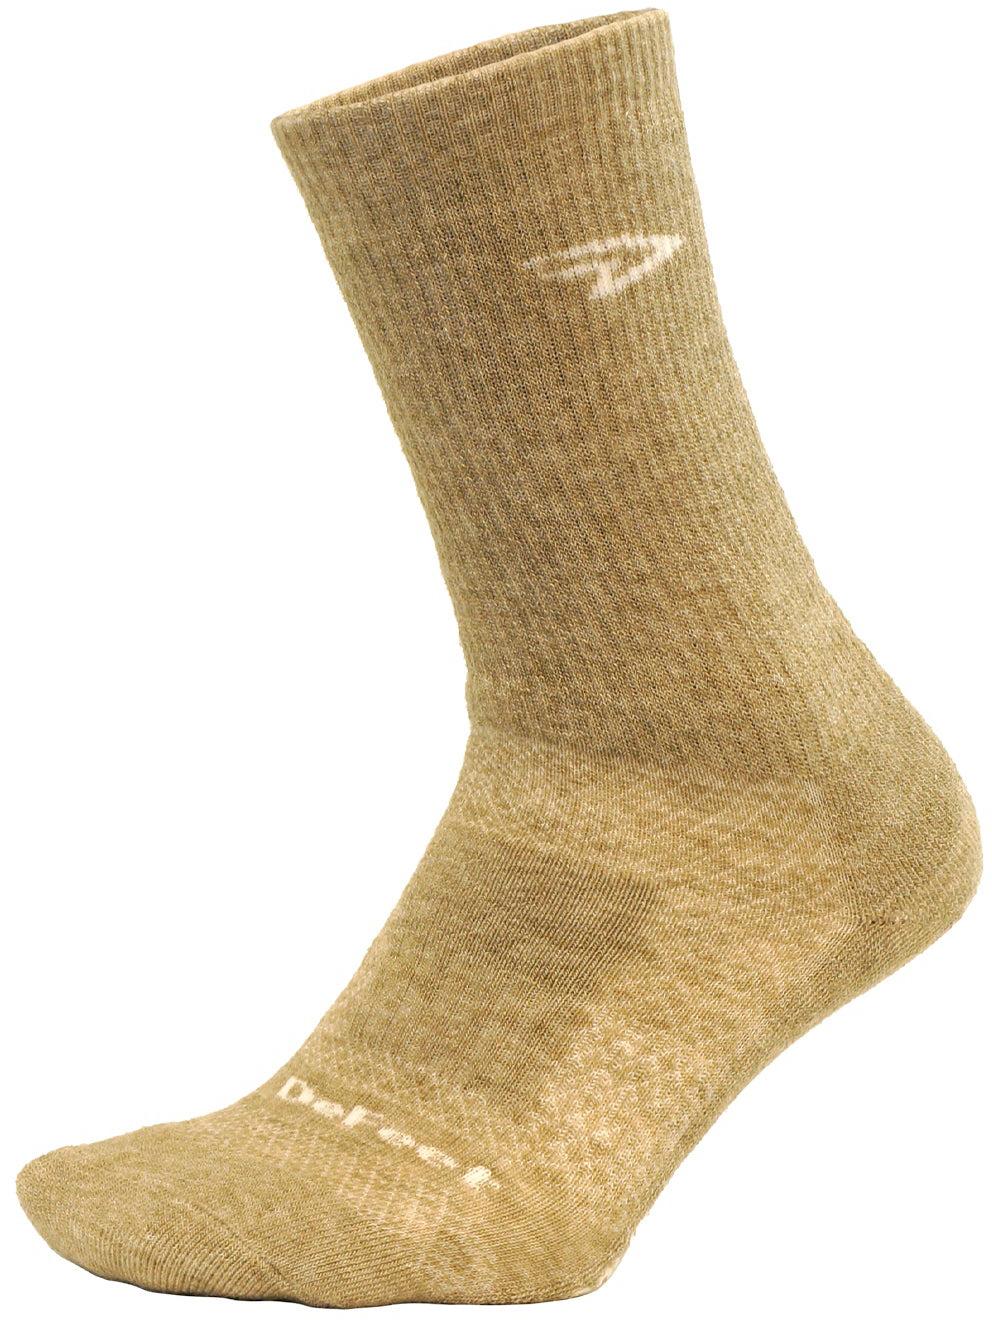 Defeet Woolie Boolie Comp 6 Socks - Yellow